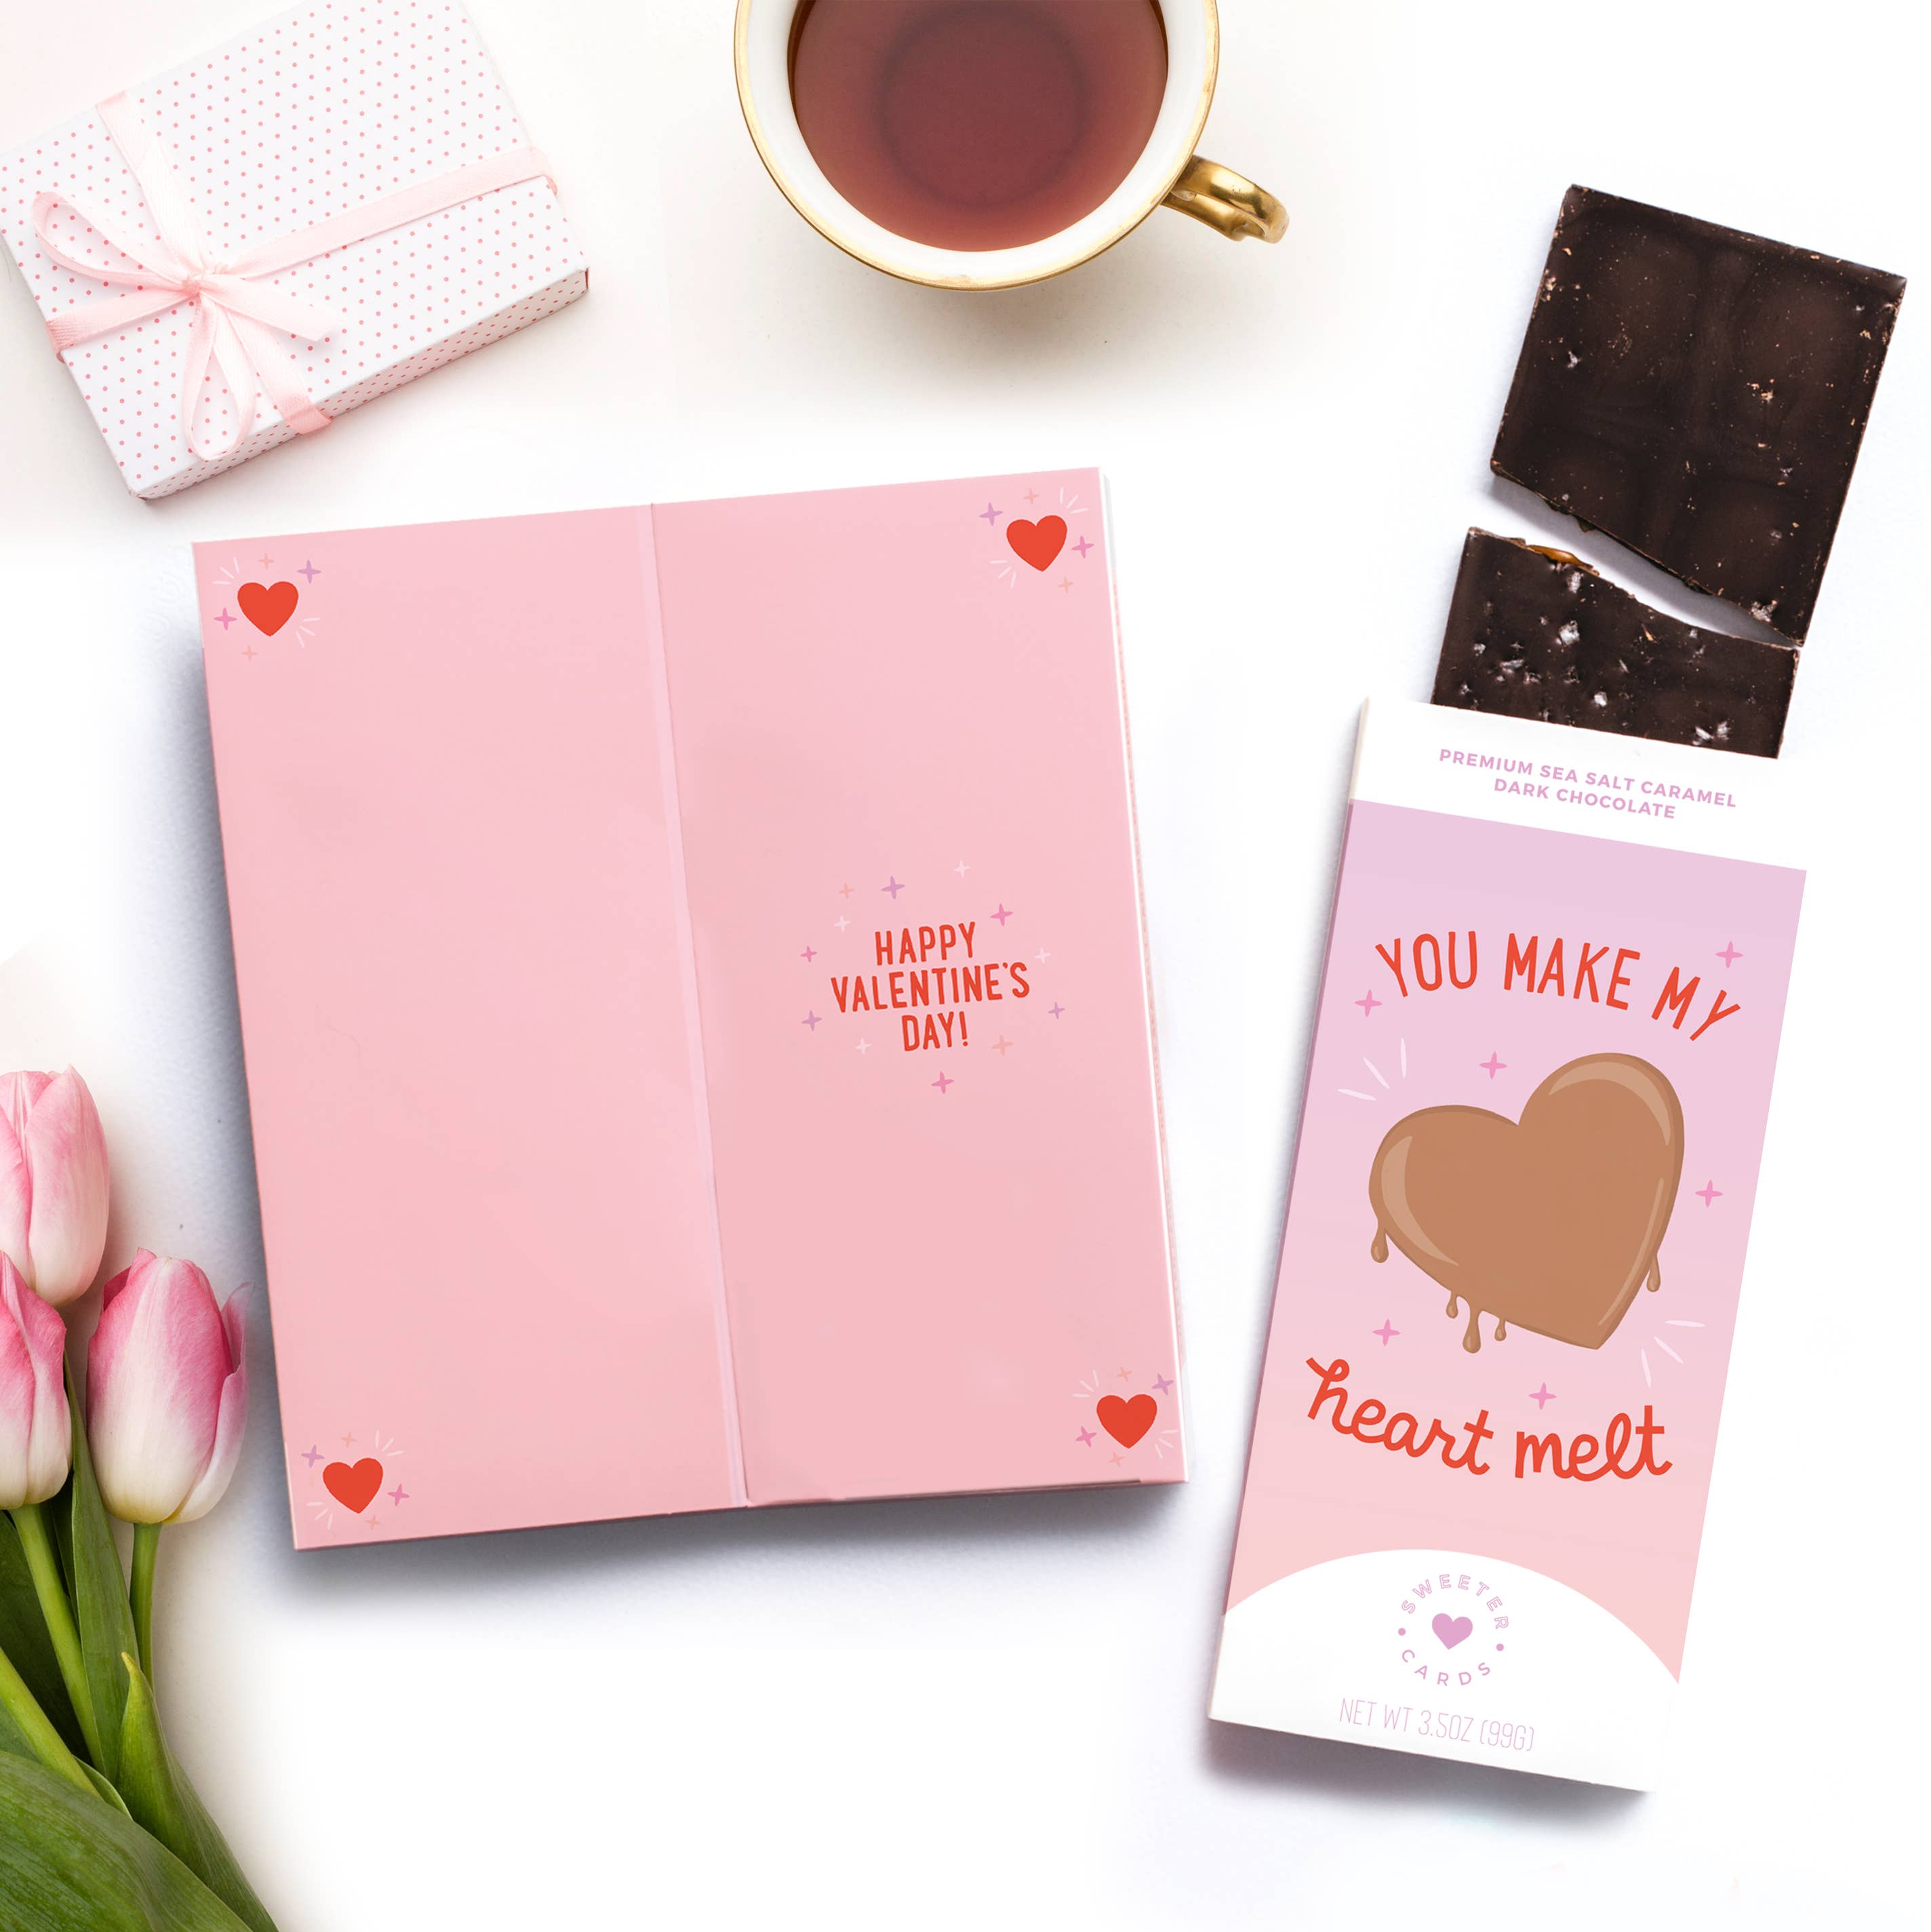 Valentine's Day Card With Chocolate Bar – Make My Heart Melt